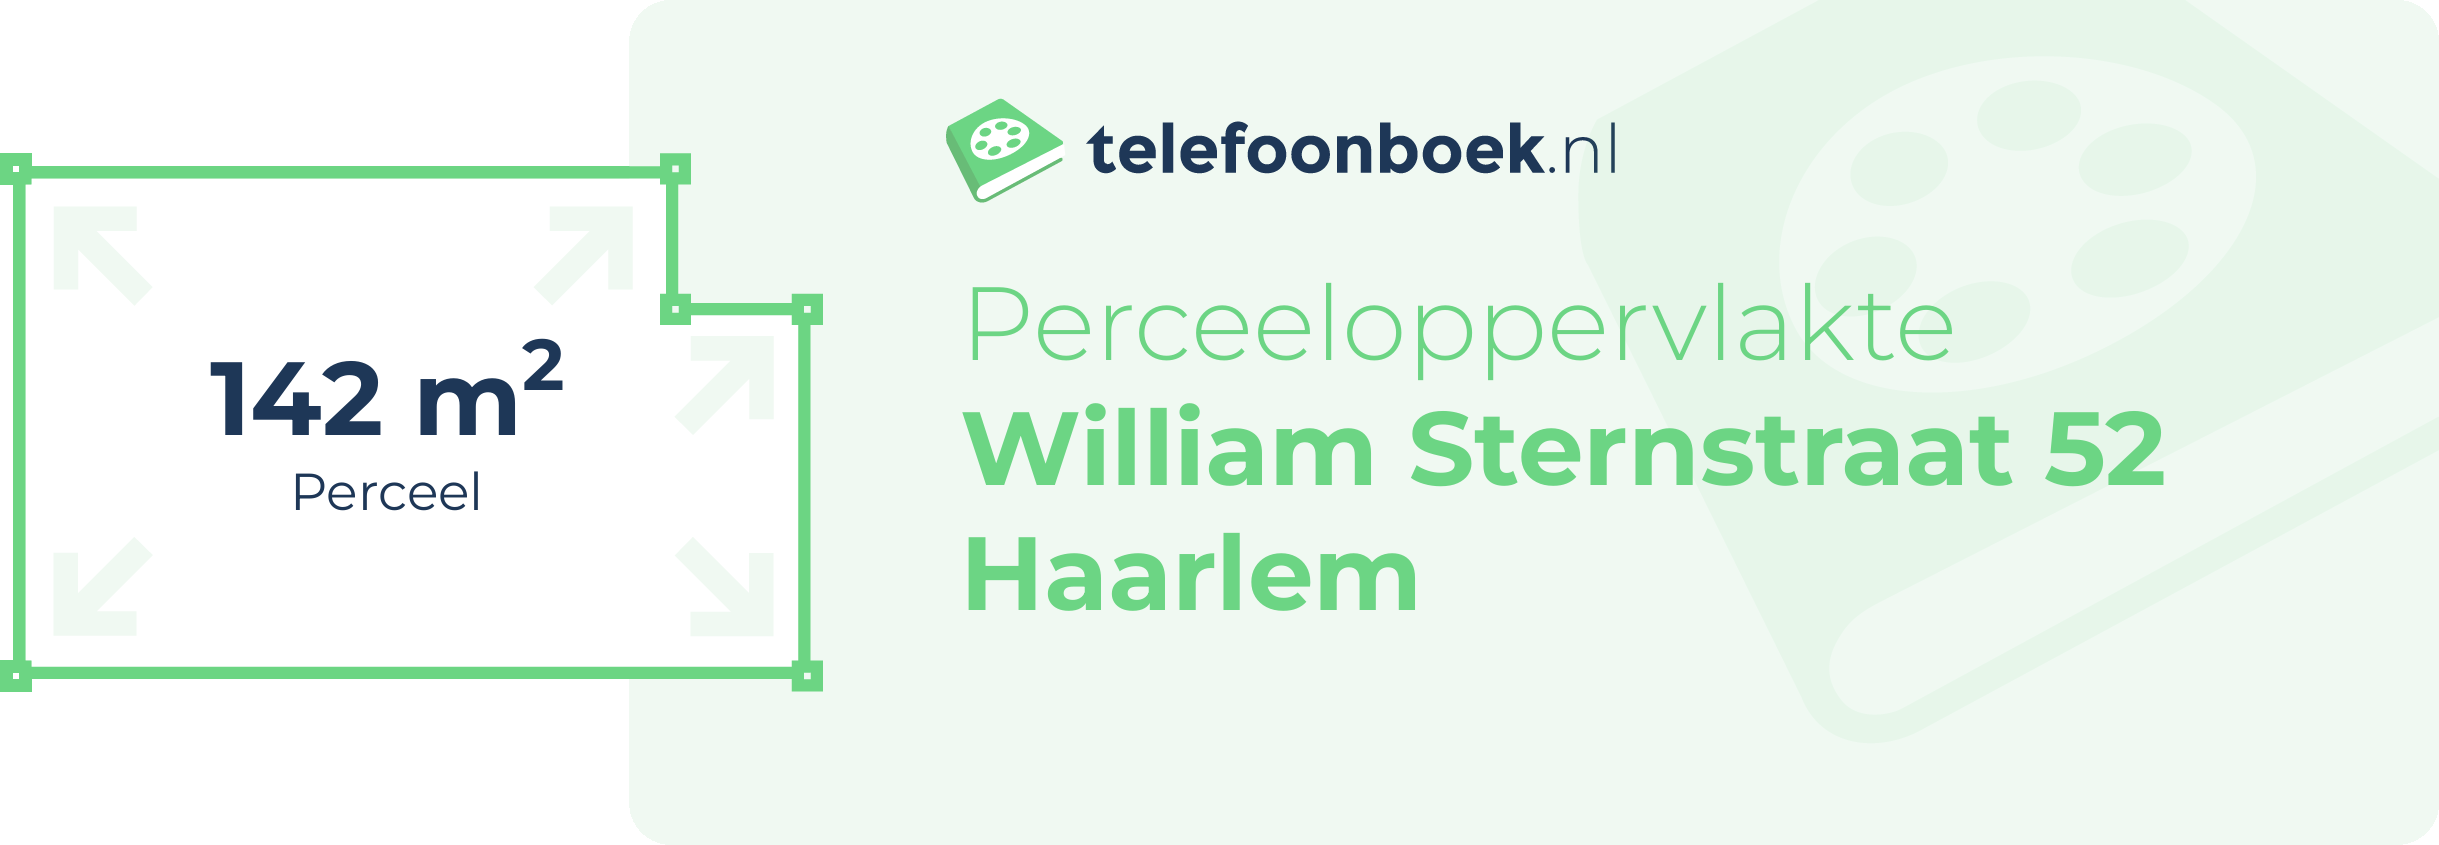 Perceeloppervlakte William Sternstraat 52 Haarlem